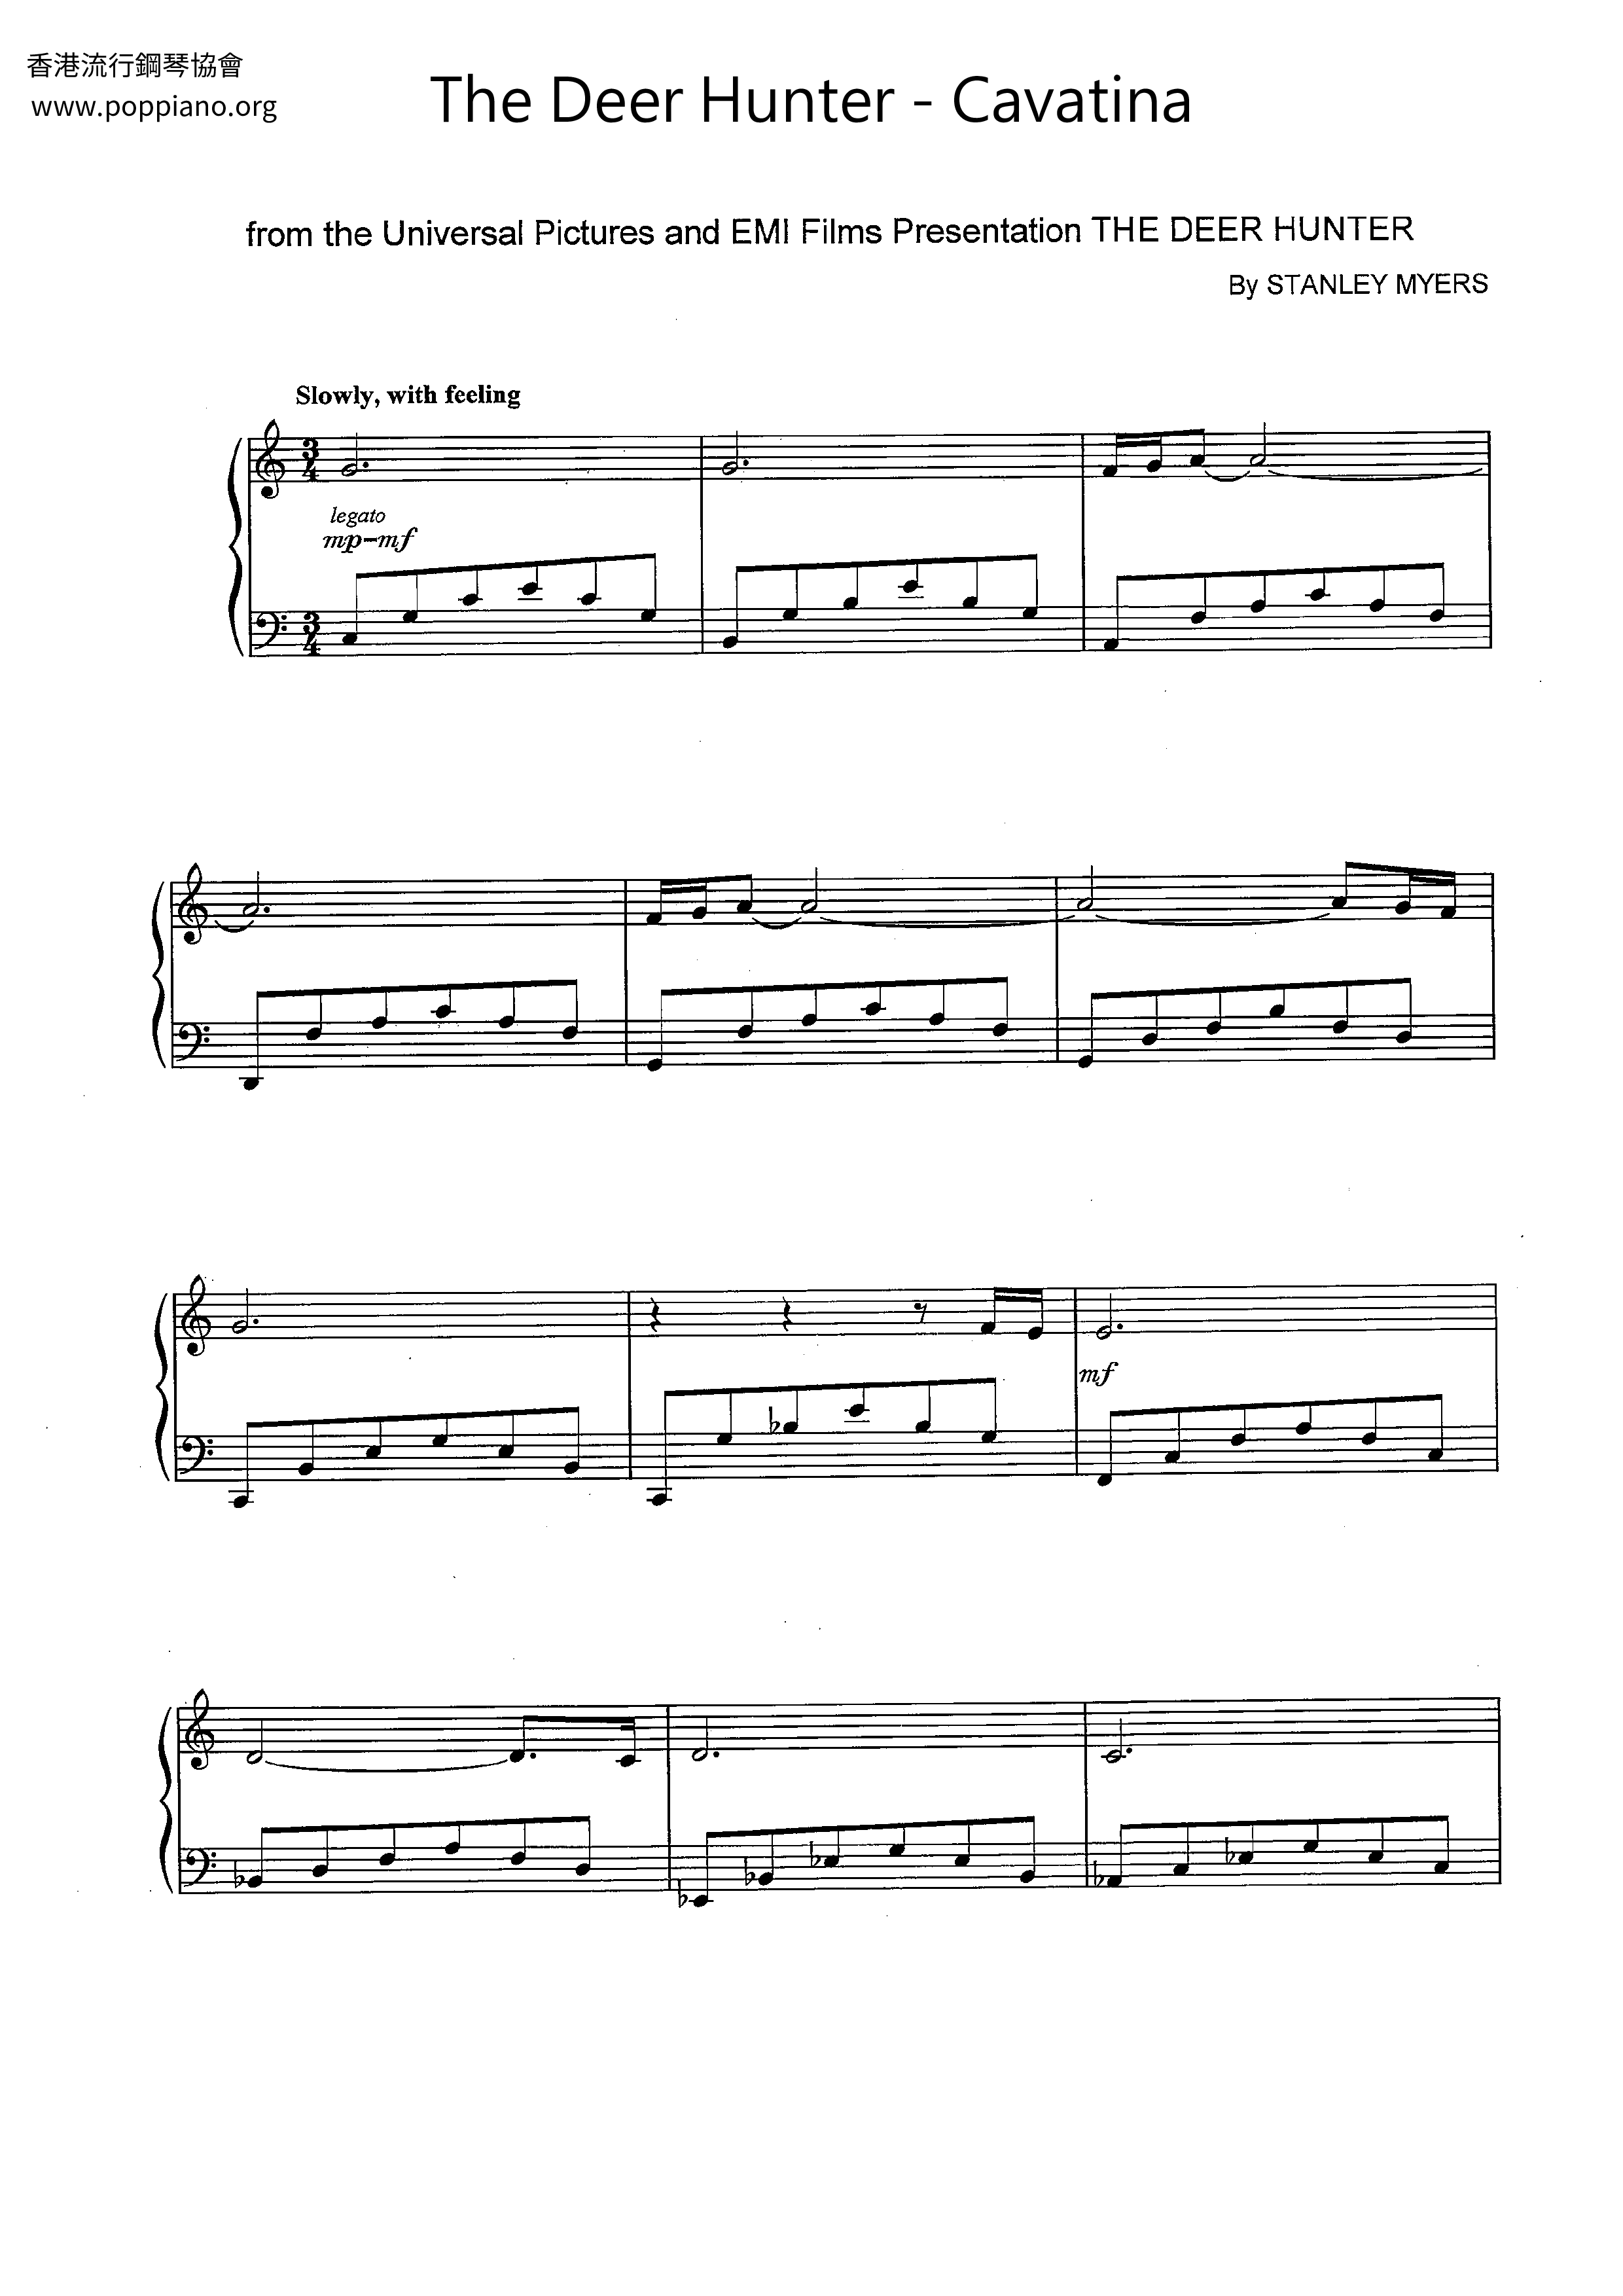 Pez anémona promesa dañar ☆ The Deer Hunter-Cavatina Sheet Music pdf, - Free Score Download ☆